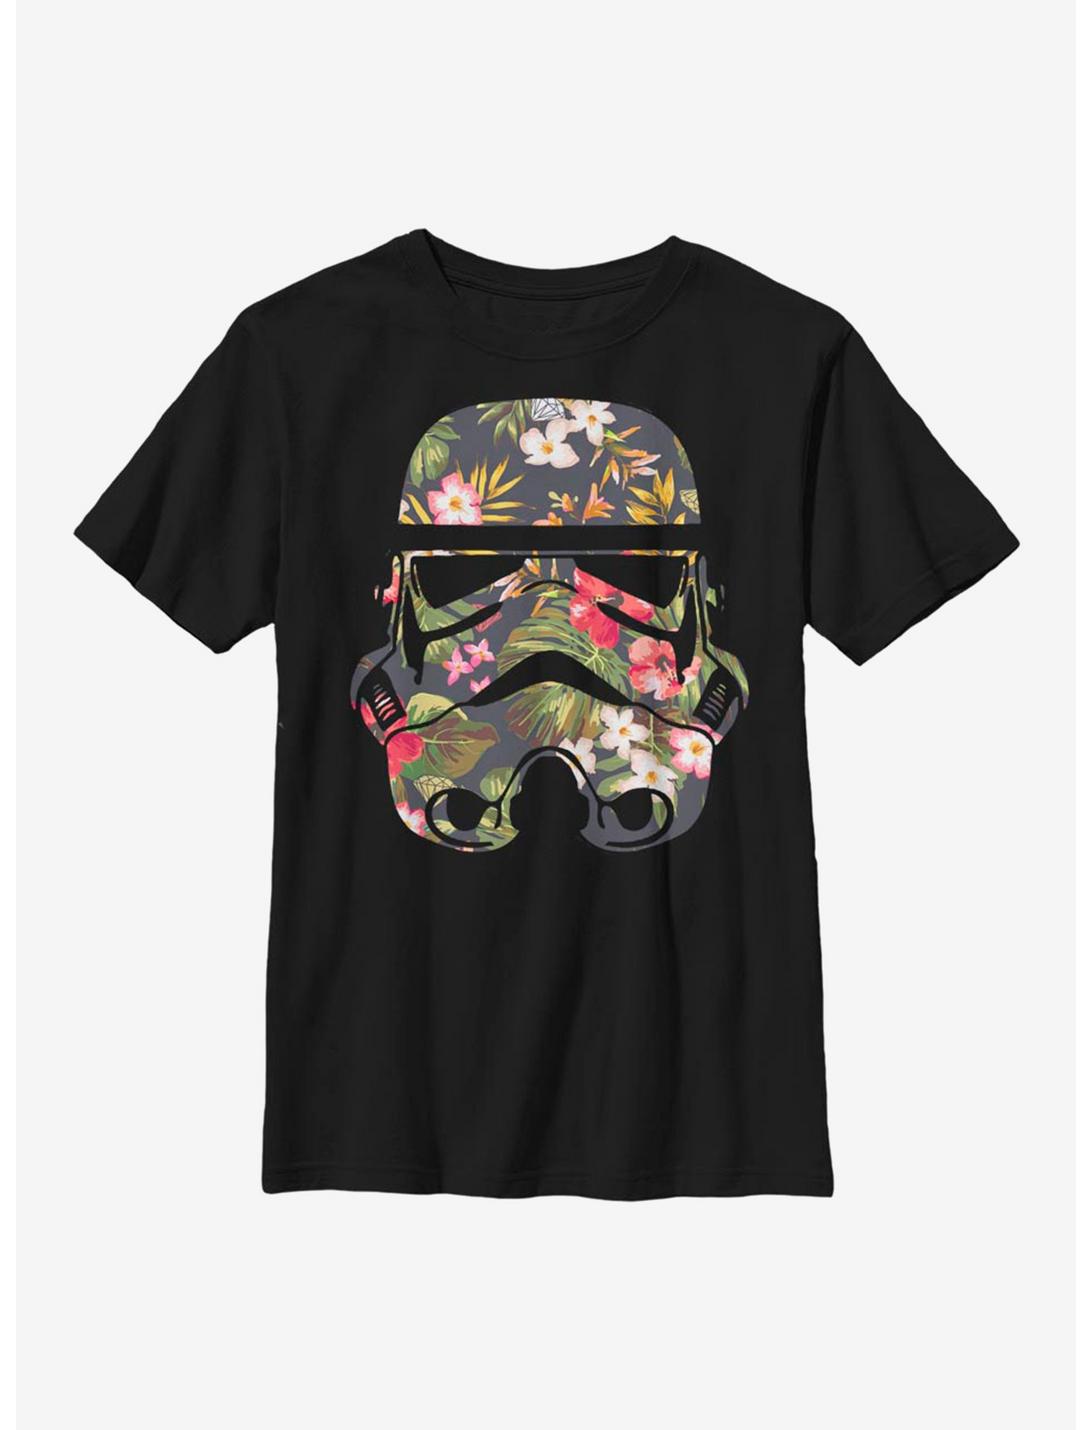 Star Wars Storm Flowers Youth T-Shirt, BLACK, hi-res